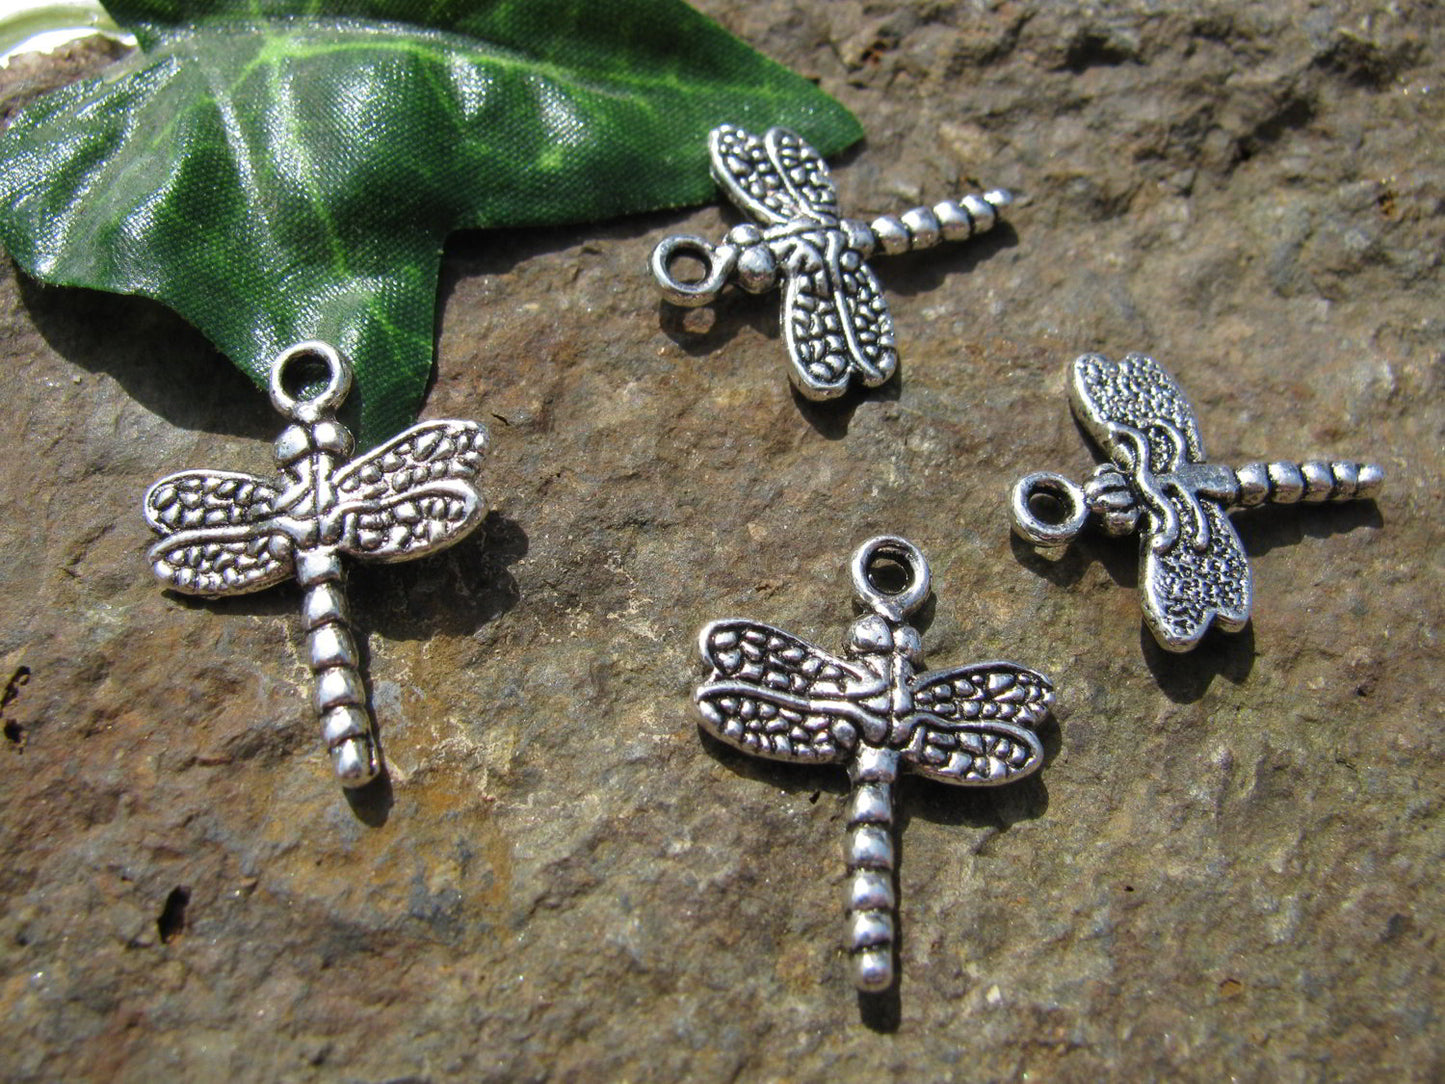 8 Metallanhänger Libelle, Silberfarben 1,55cm, Anhänger für Bettelarmband Charms